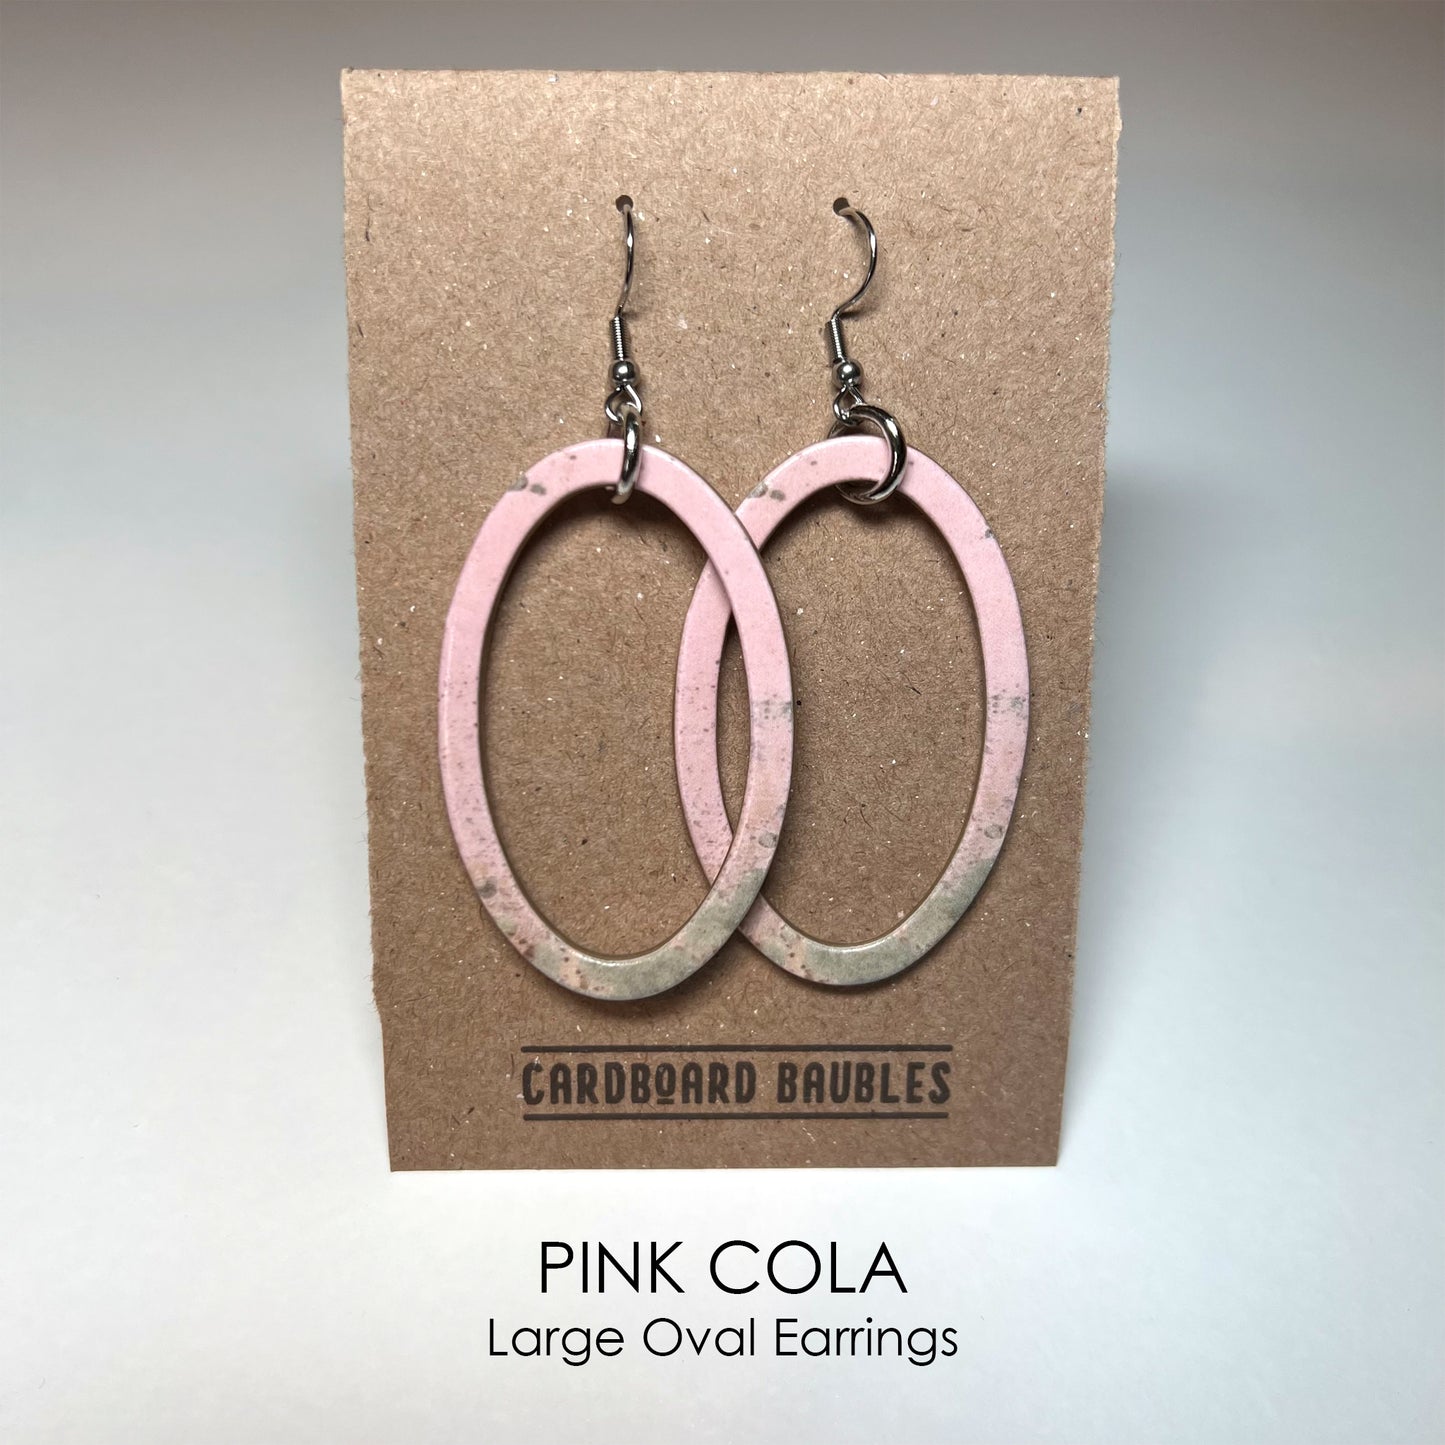 PINK COLA - Oval Cardboard Baubles Earrings